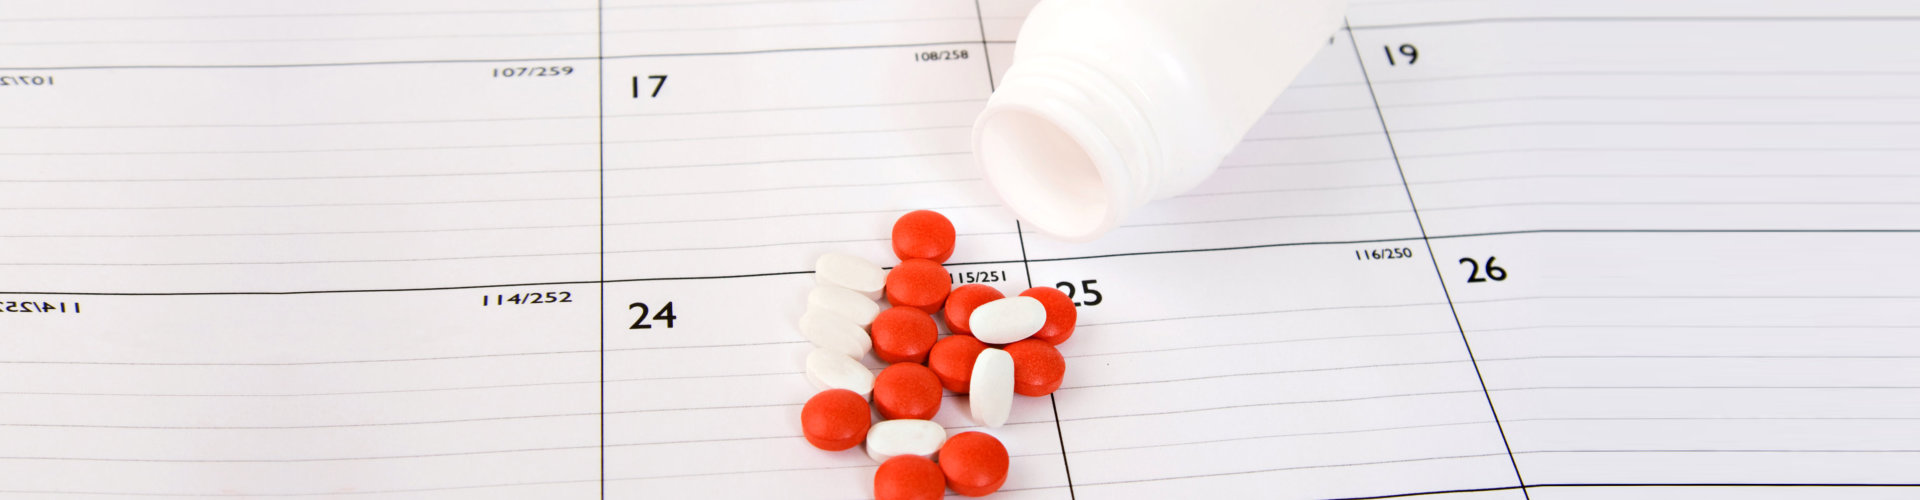 medicines in red color